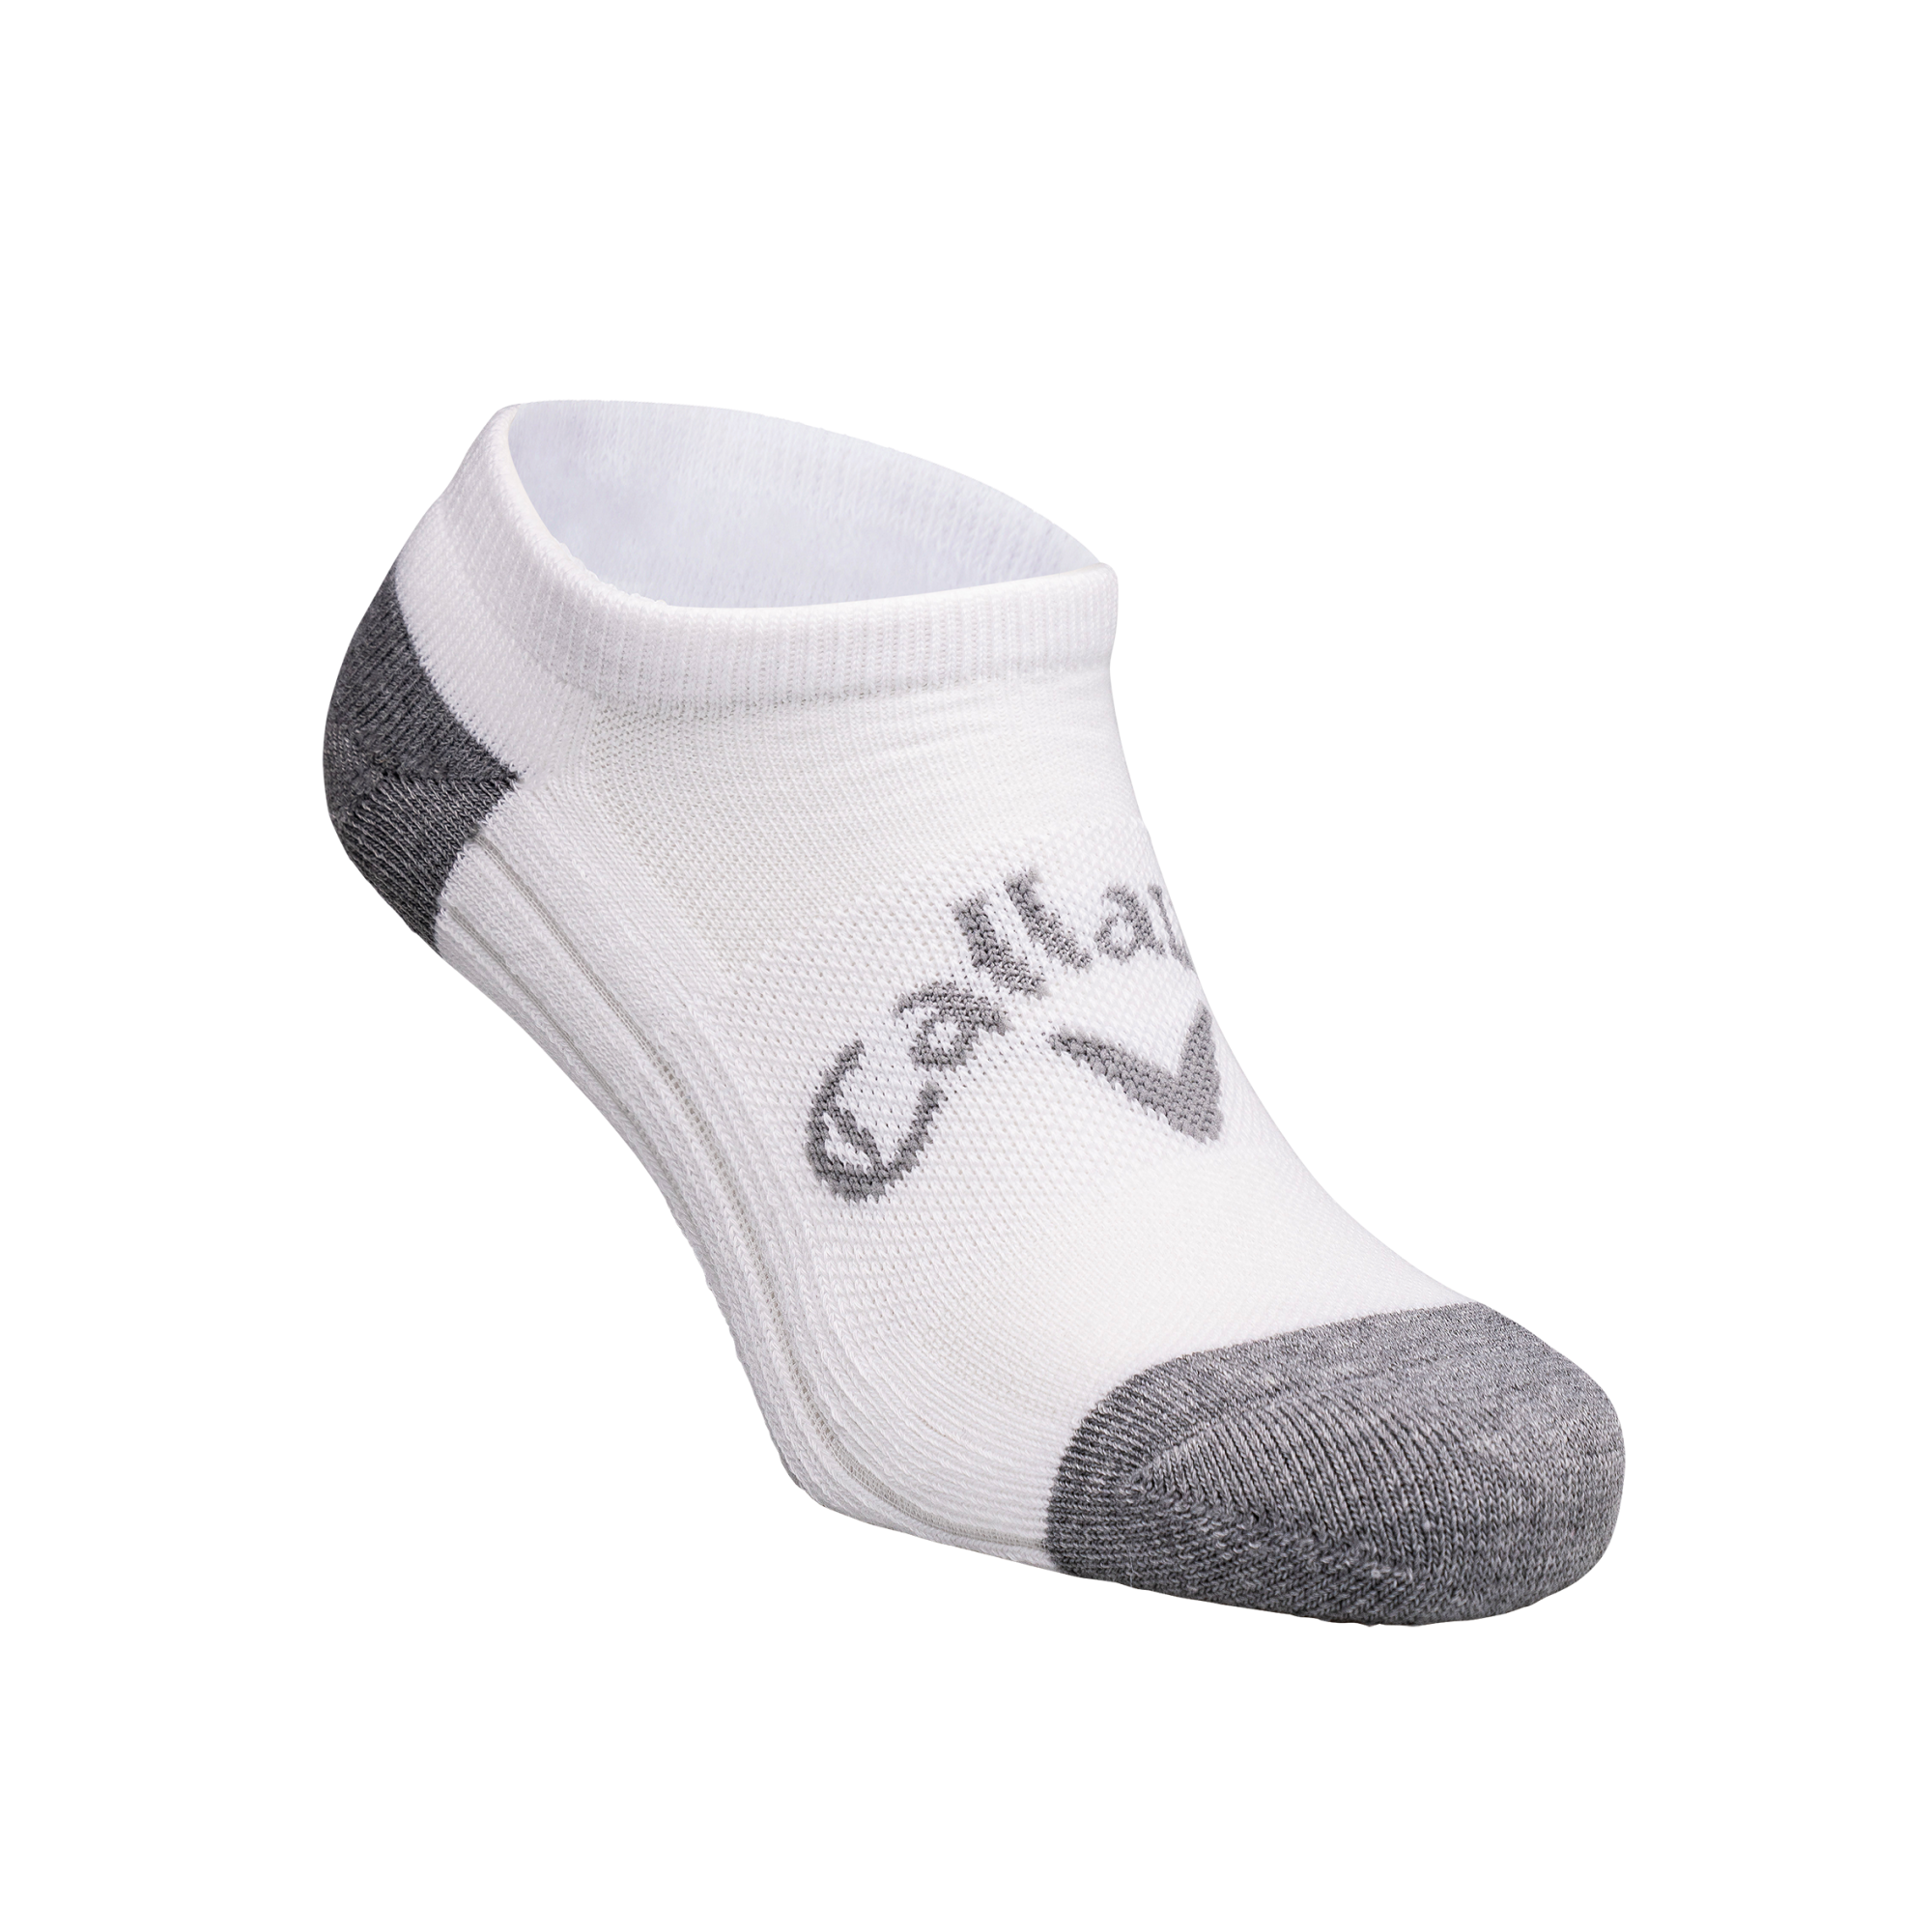 Callaway Tour Opti-Dri Low II dámské golfové ponožky, bílé/šedé